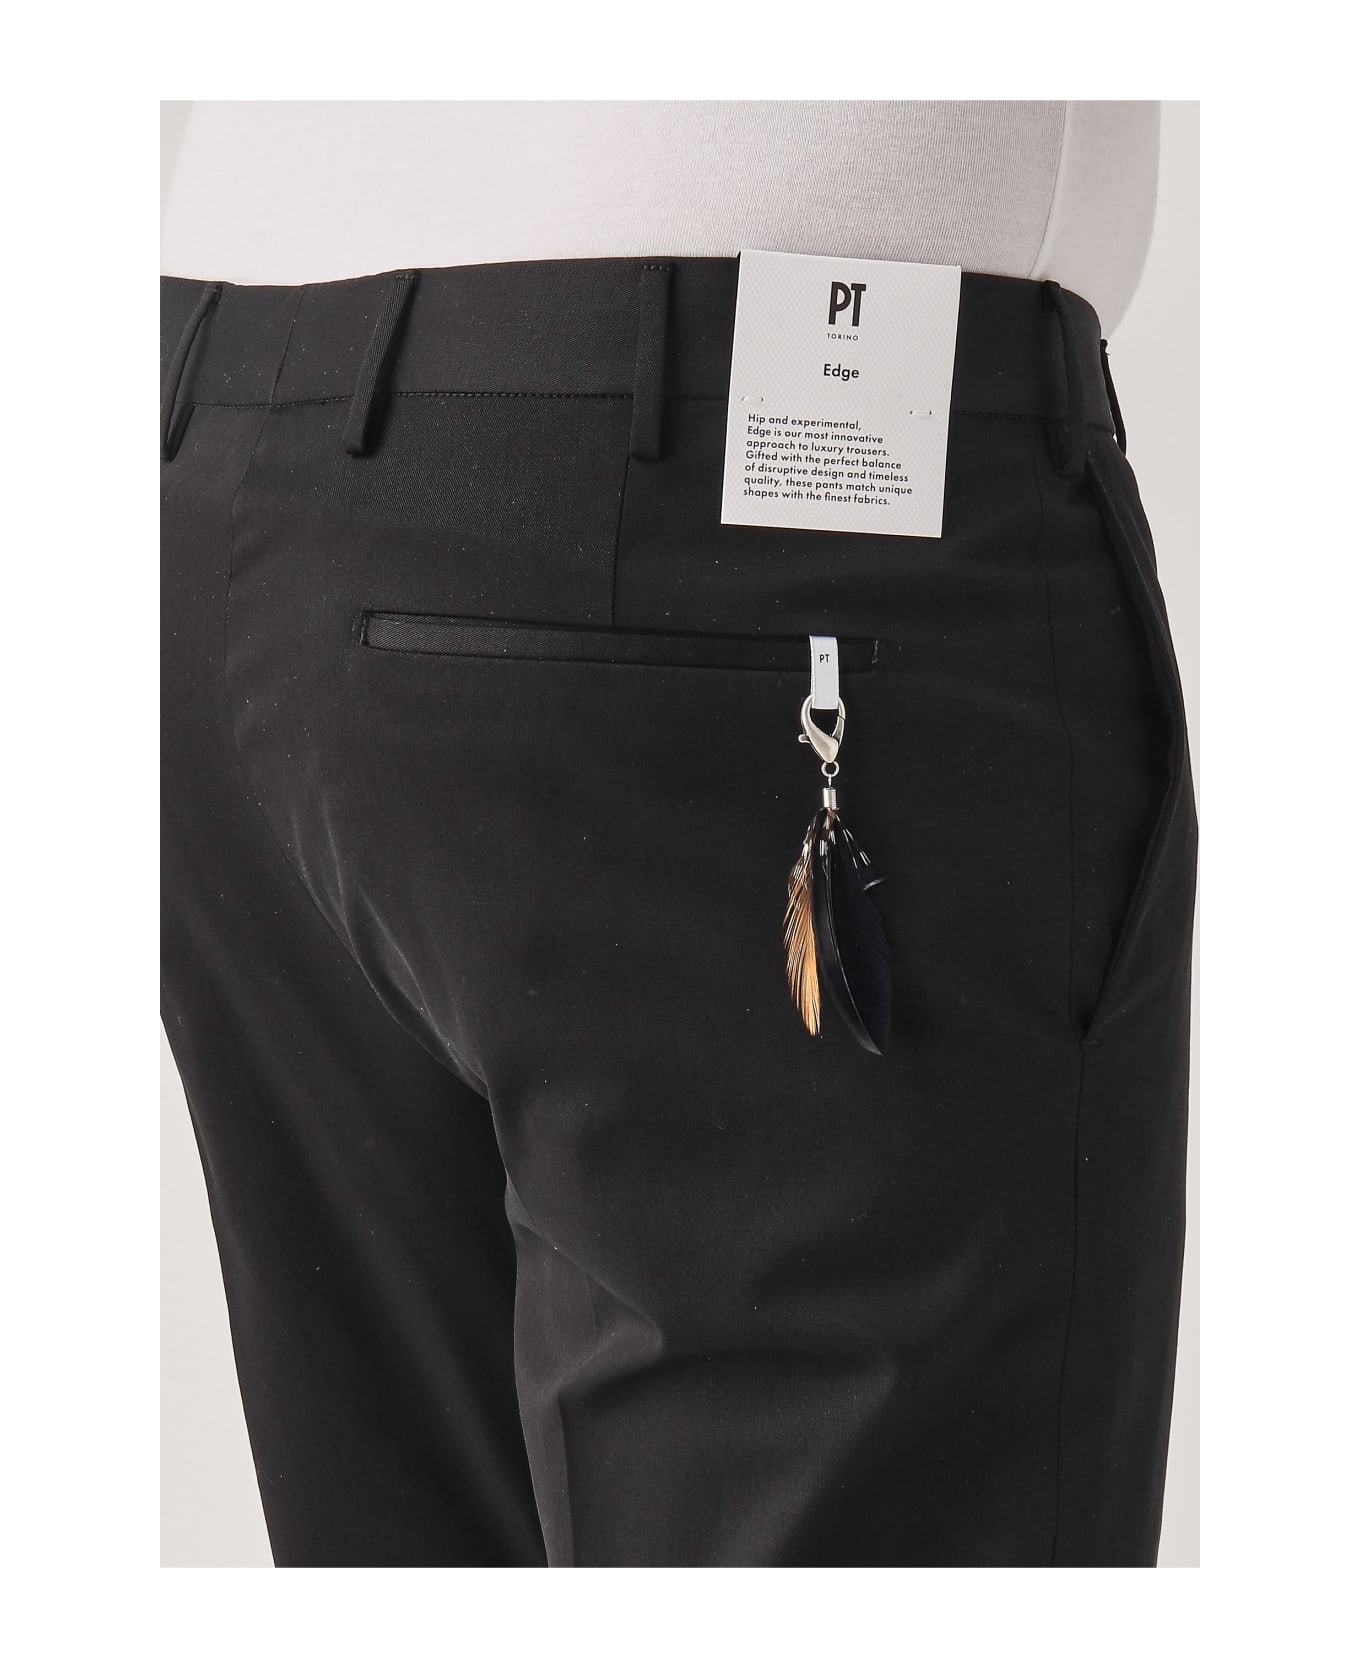 PT Torino Pantalone Uomo Trousers - NERO ボトムス